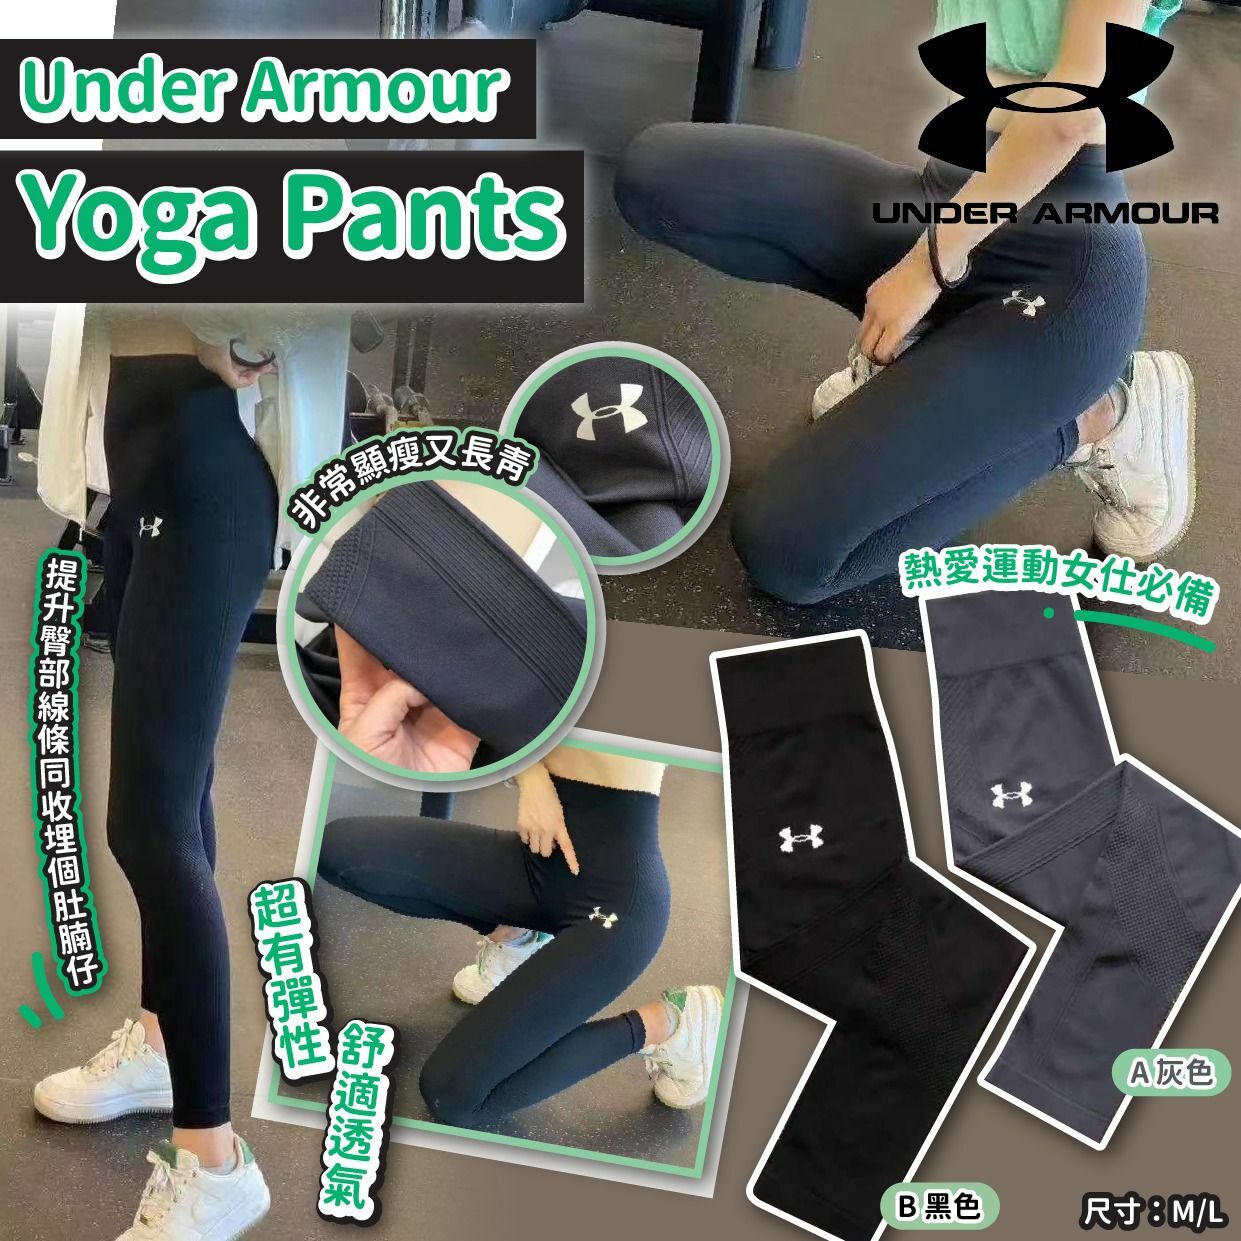 Under Armour Yoga Pants